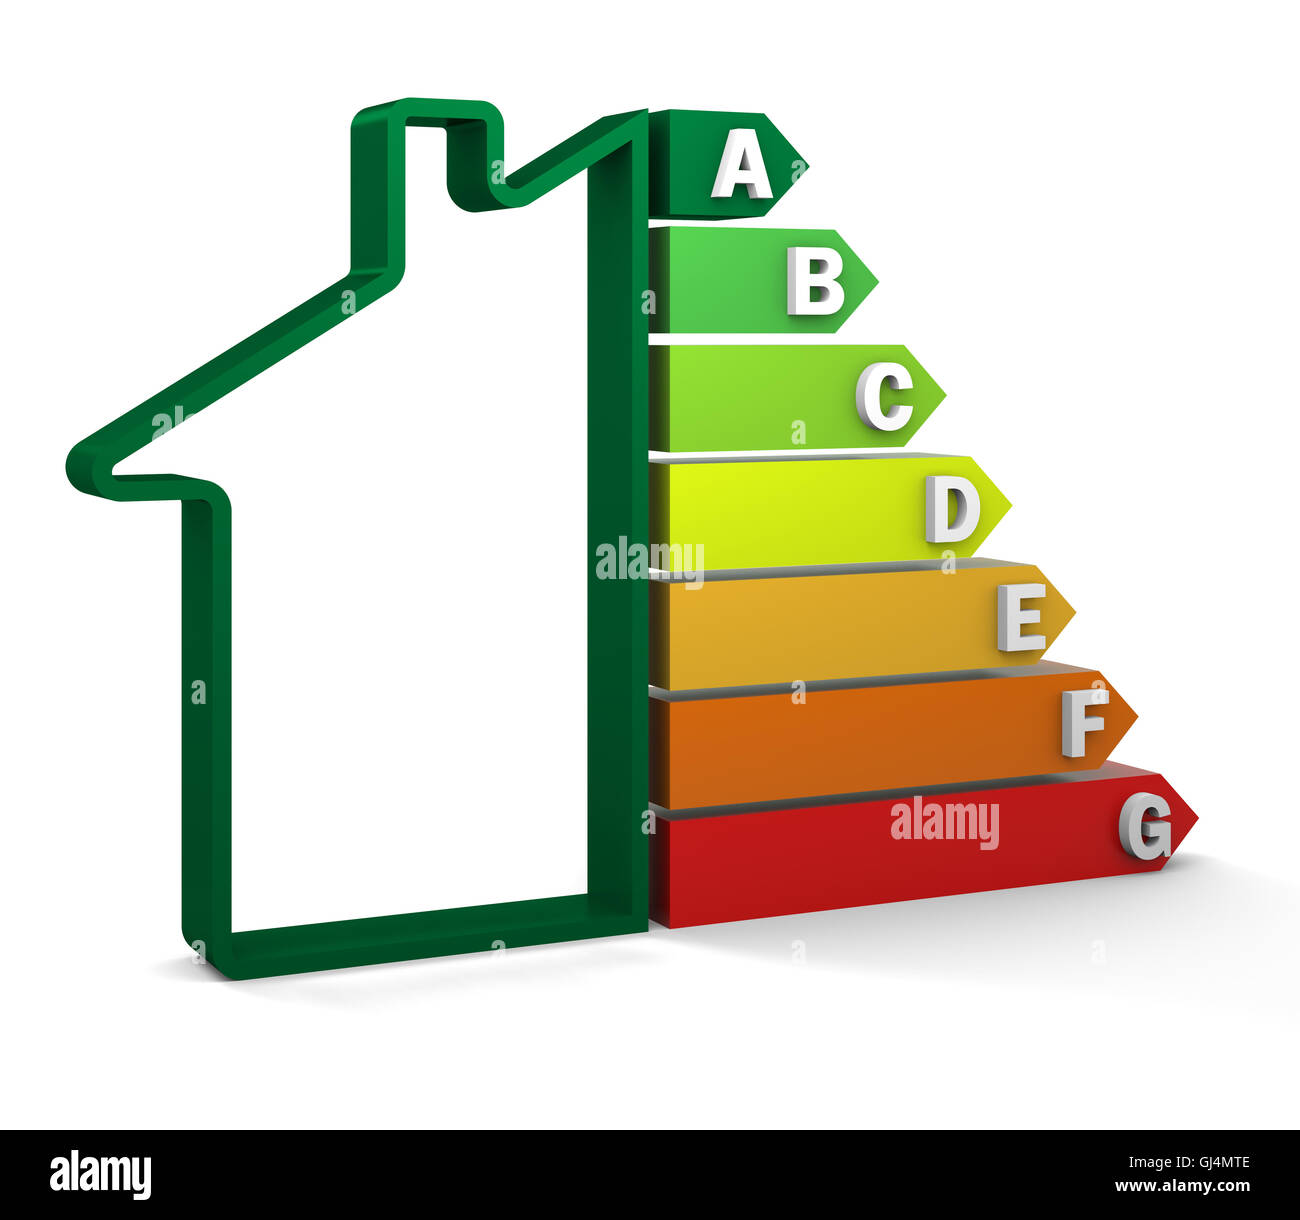 Energie-Effizienz-Rating-System Stockfoto